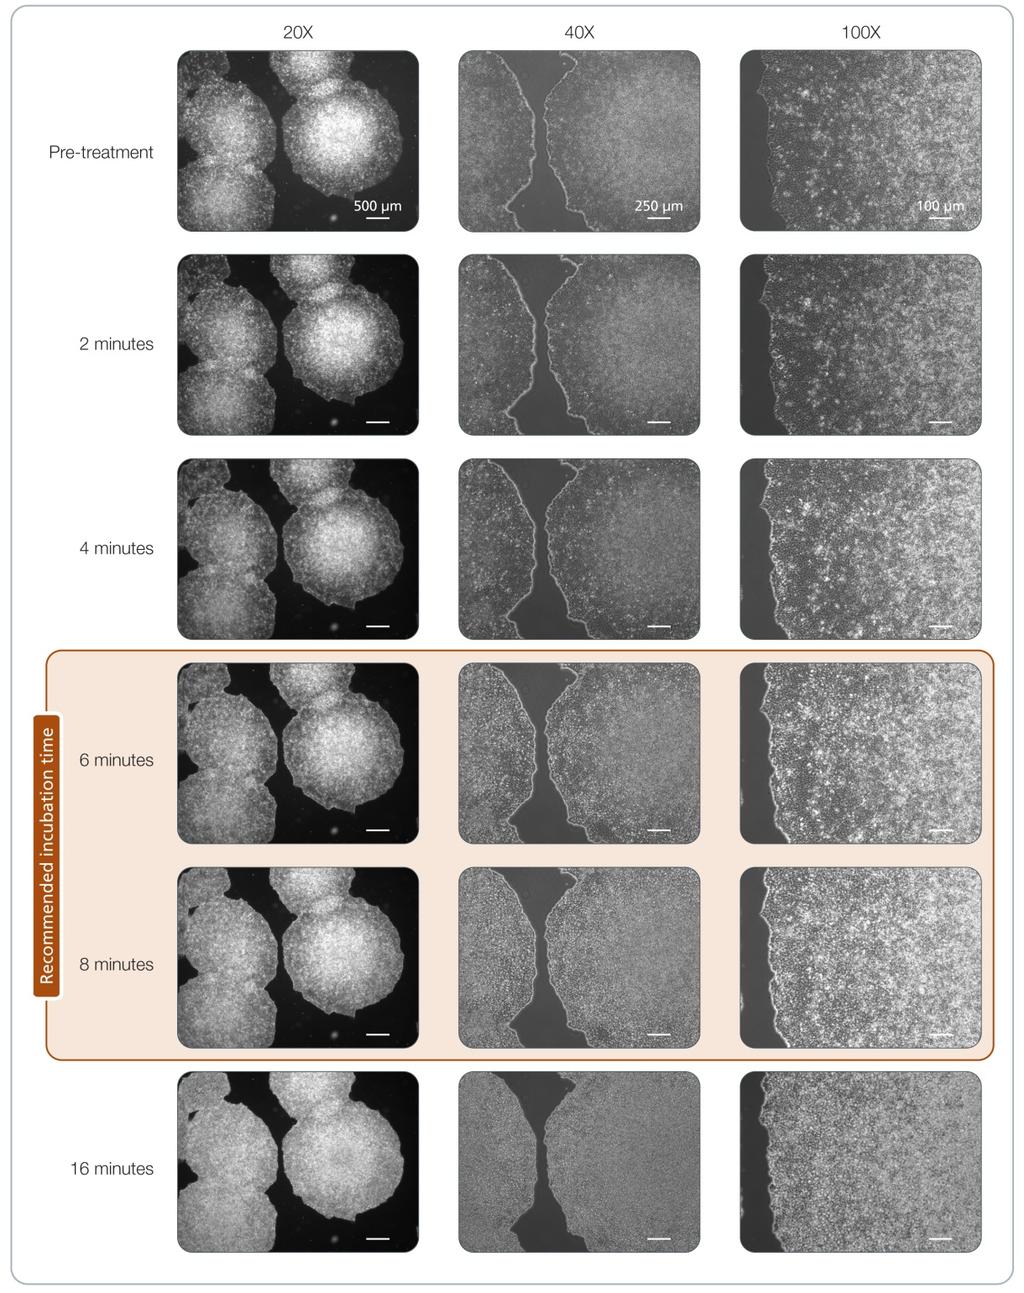 24 Figure 11. Effect of Gentle Cell Dissociation Reagent on Human ips Cells Cultured on Corning Matrigel Matrix in TeSR 2 Medium.